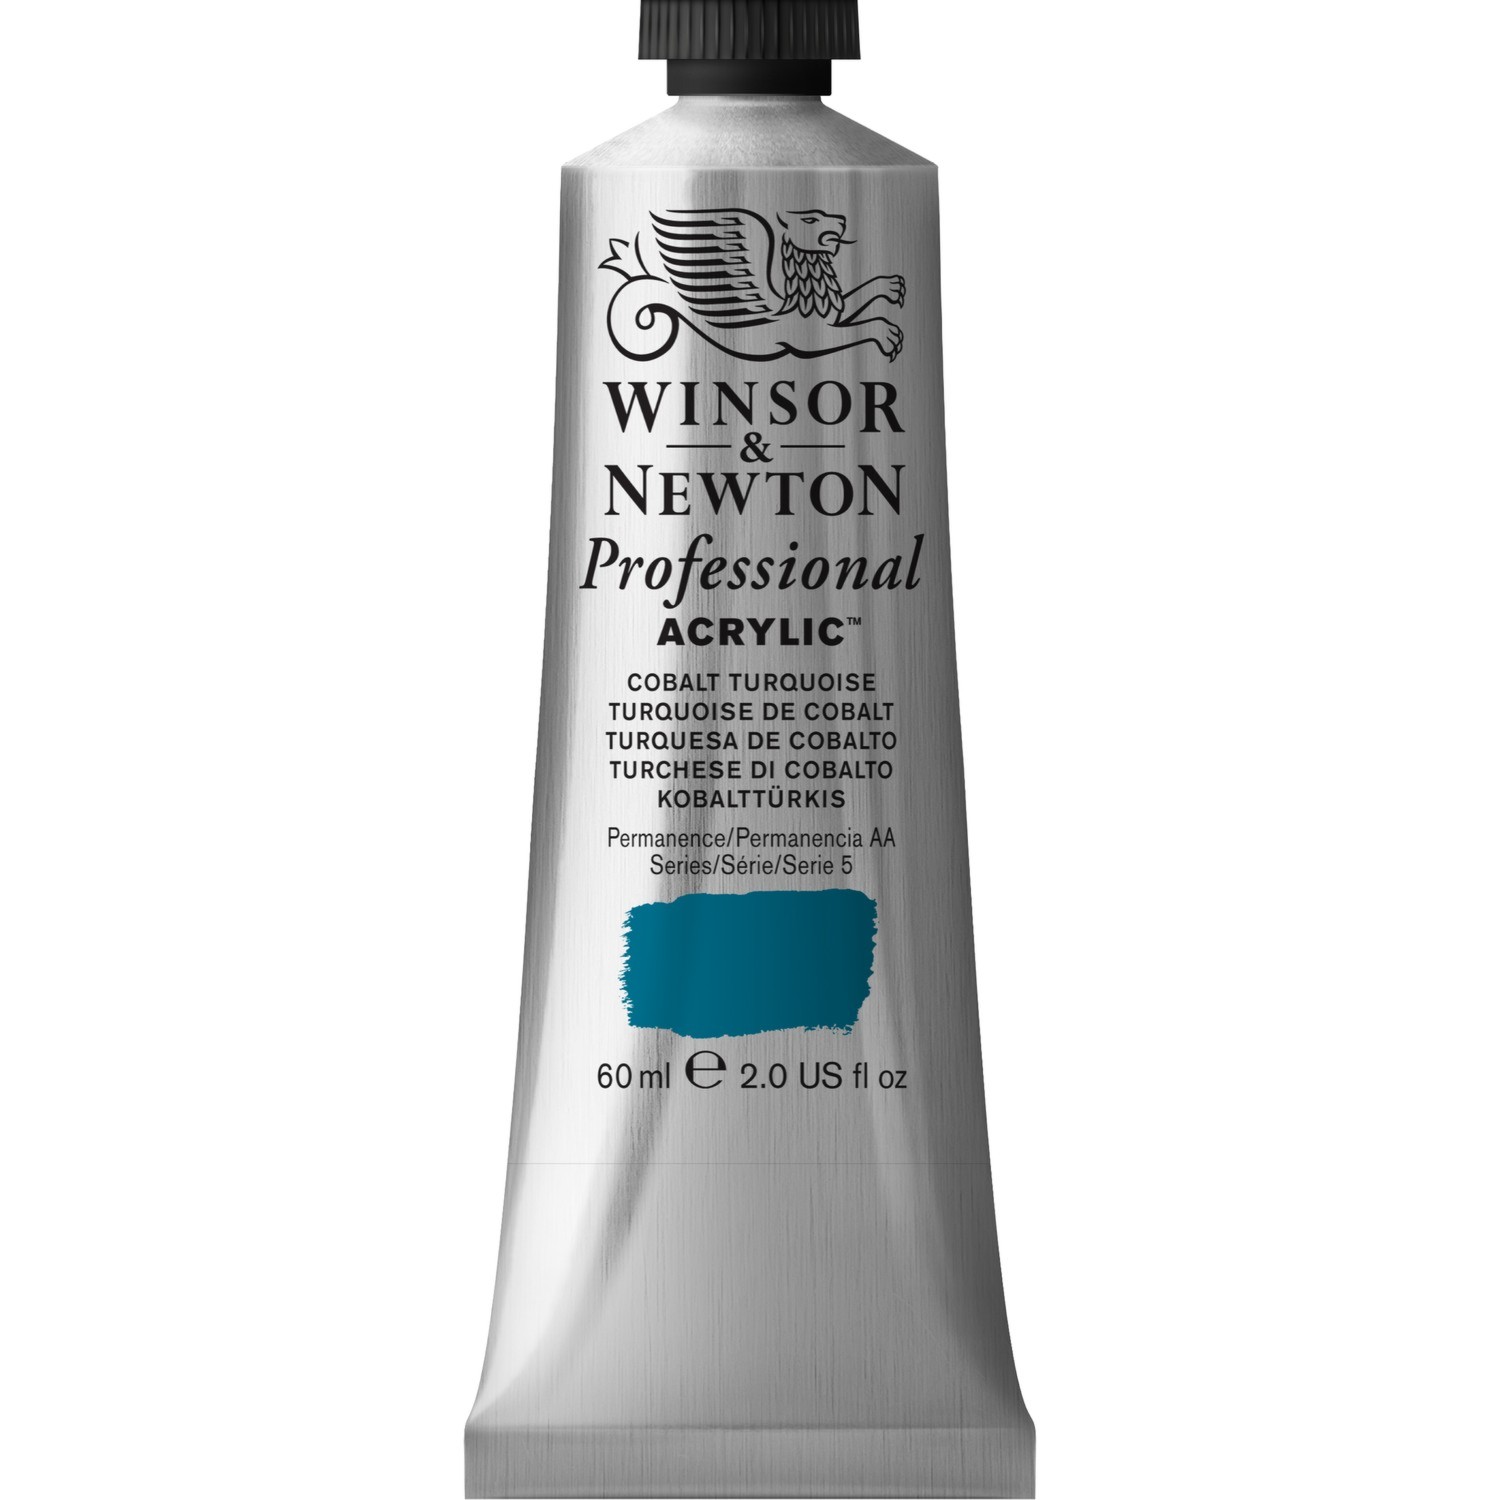 Winsor and Newton 60ml Professional Acrylic Paint - Cobalt Turquoise Image 1